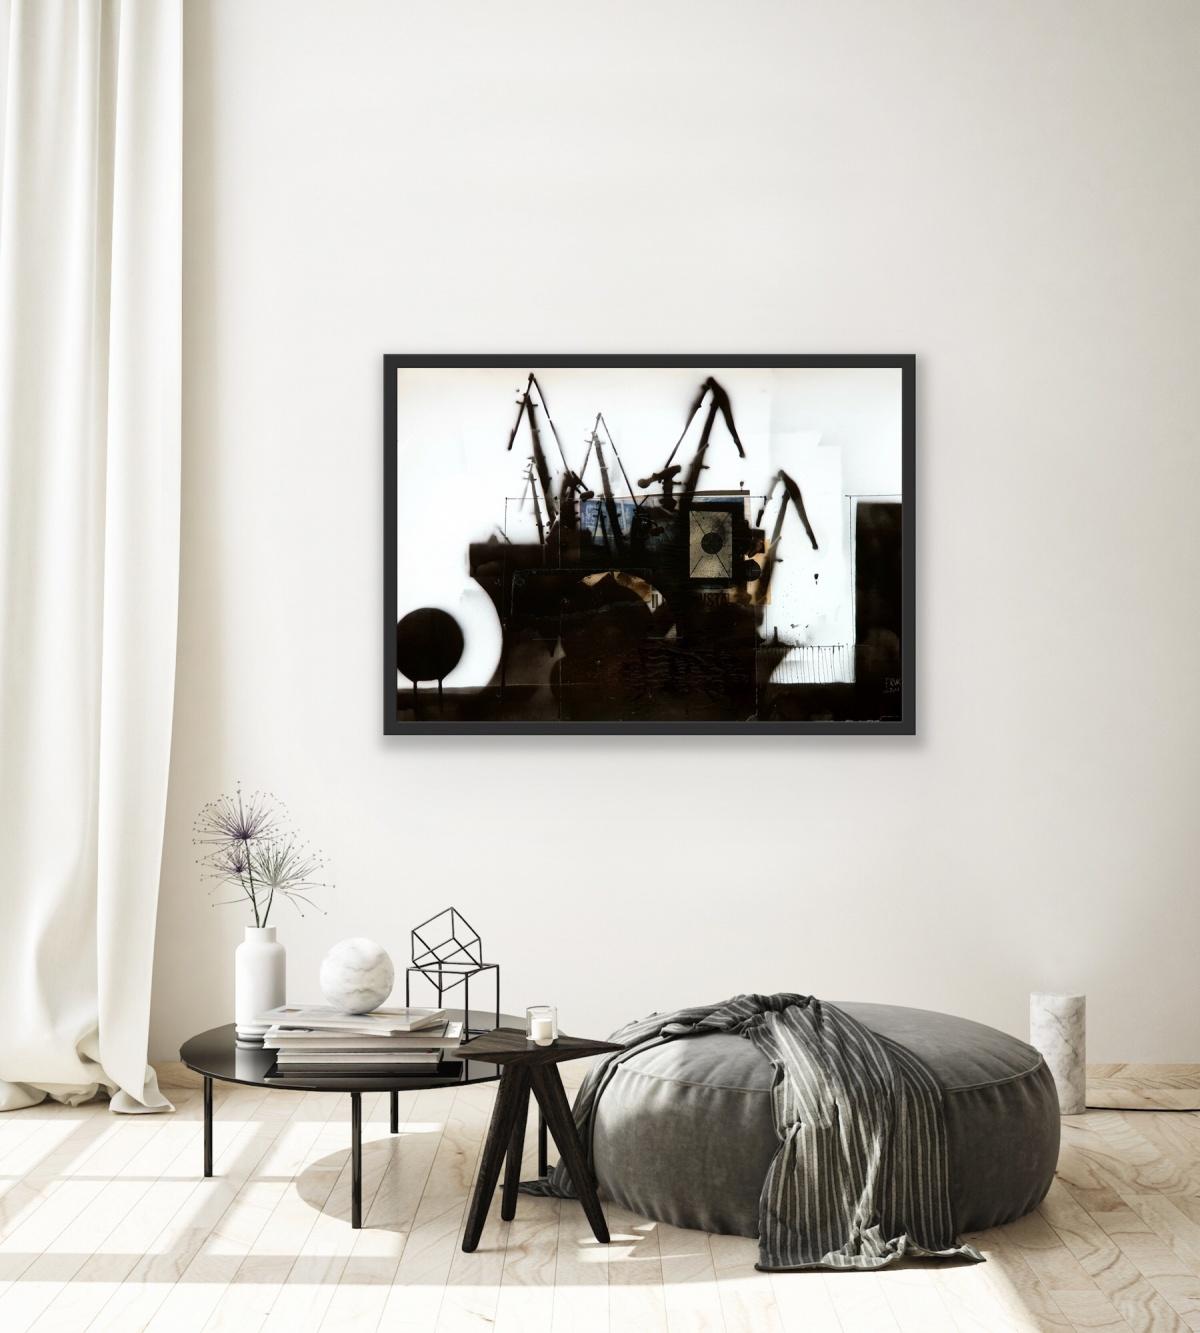 Cranes 6 - Black & white painting, Mixed media, Collage, Polish art - Painting by Lukasz Fruczek